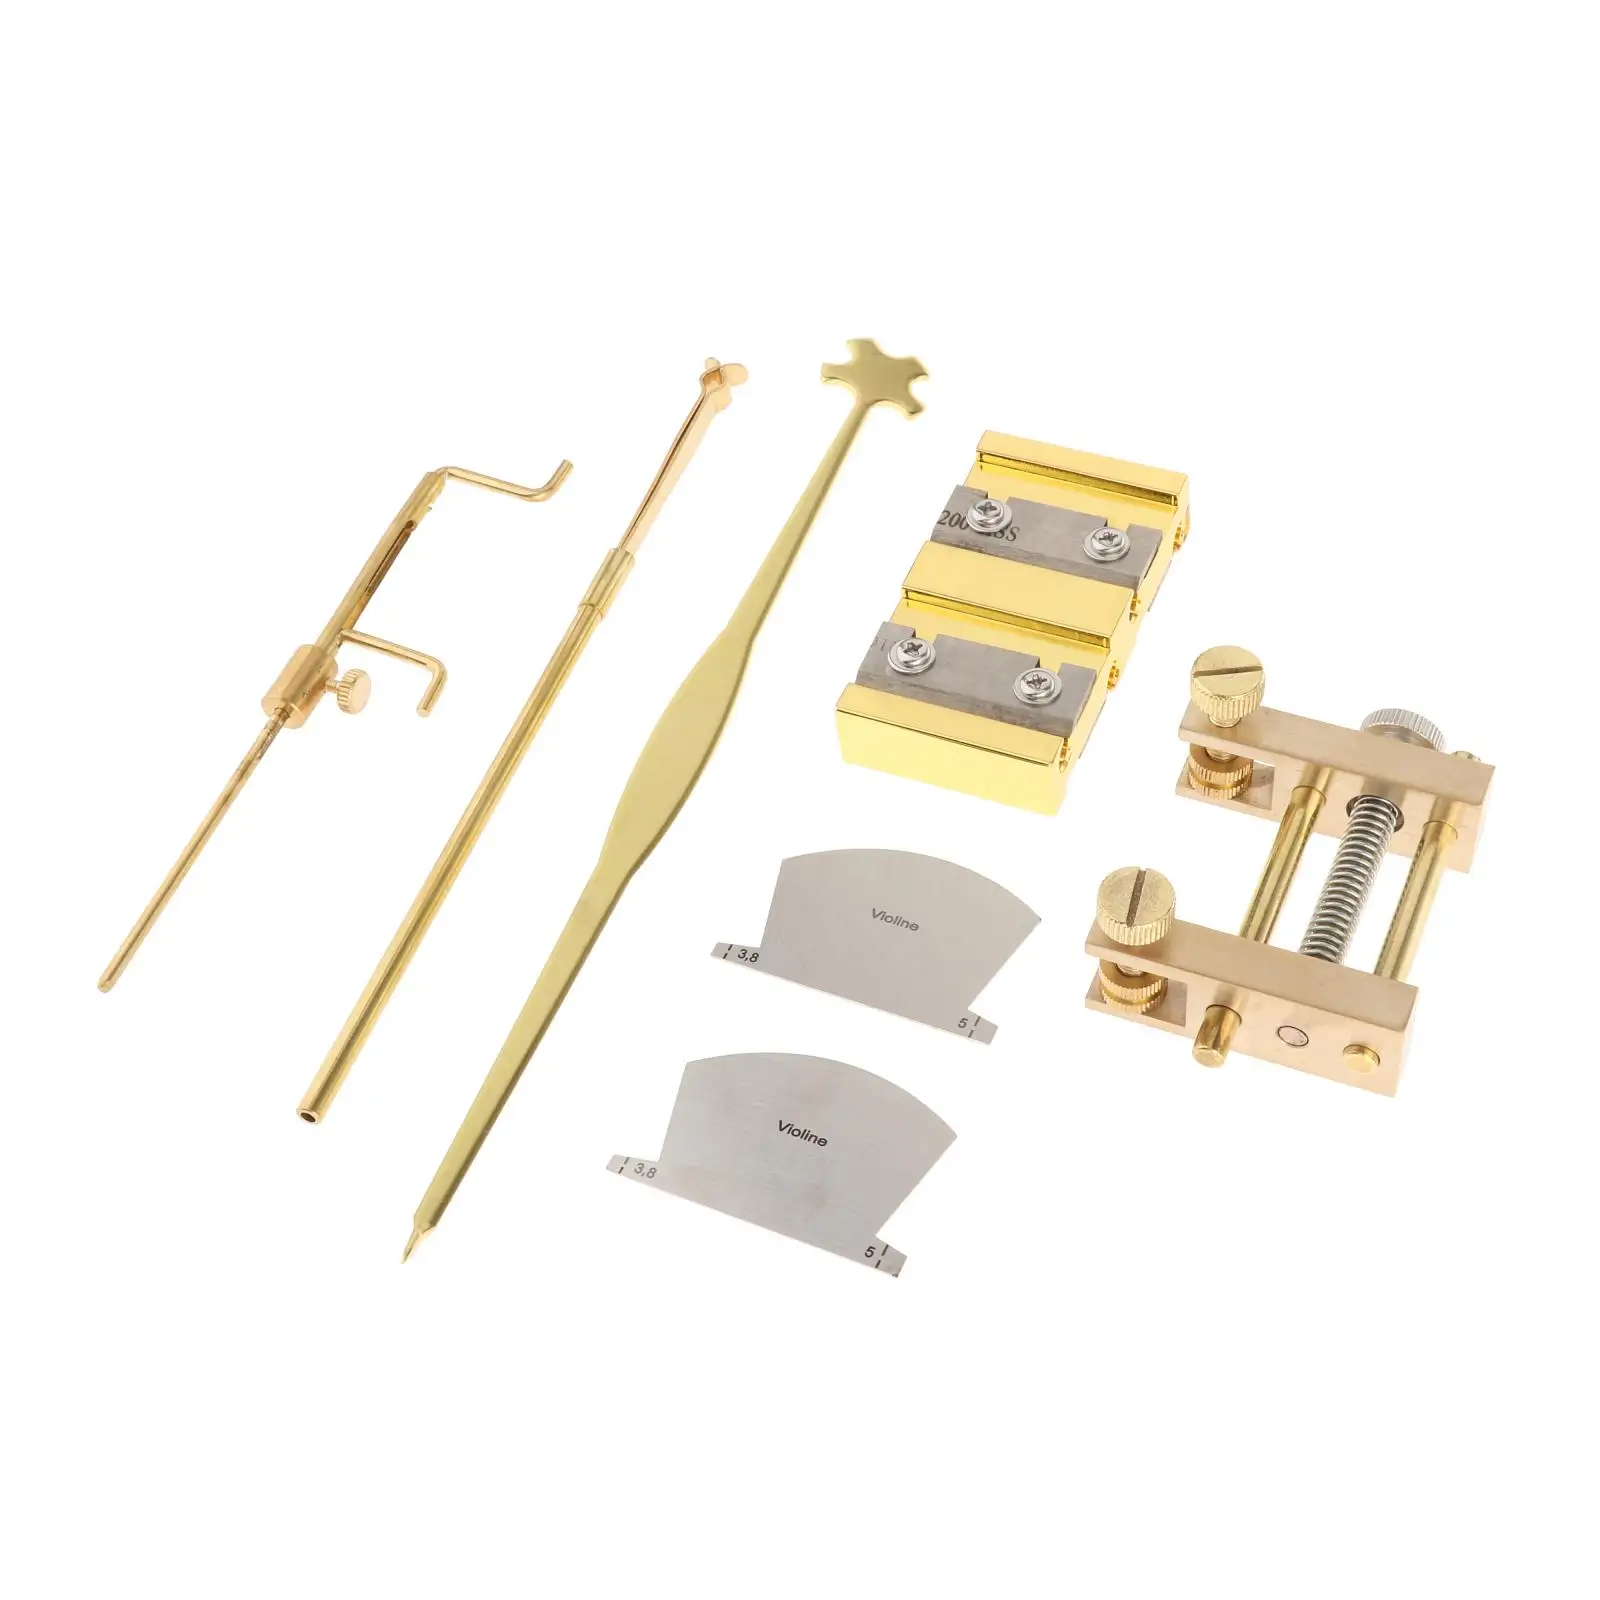 

7Pack of Pro Brass Sound Post Gauge Measurer Retriever Clip Set and 2 Fingerboard Scrapers Violin Making Parts Repair Tools